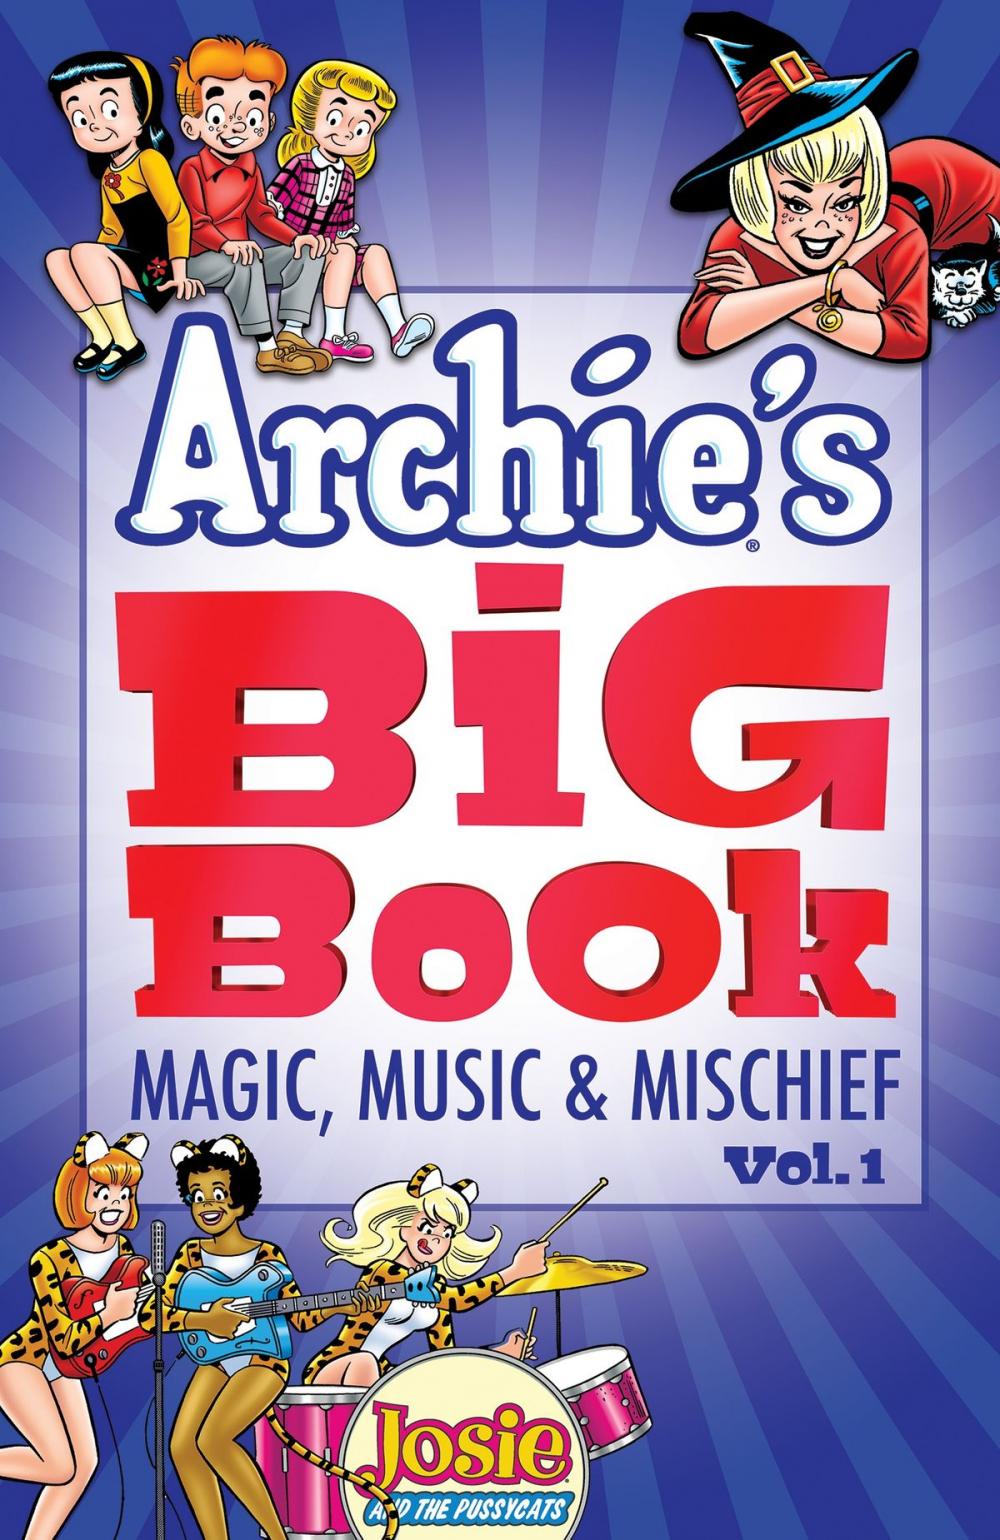 Big bigCover of Archie's Big Book Vol. 1